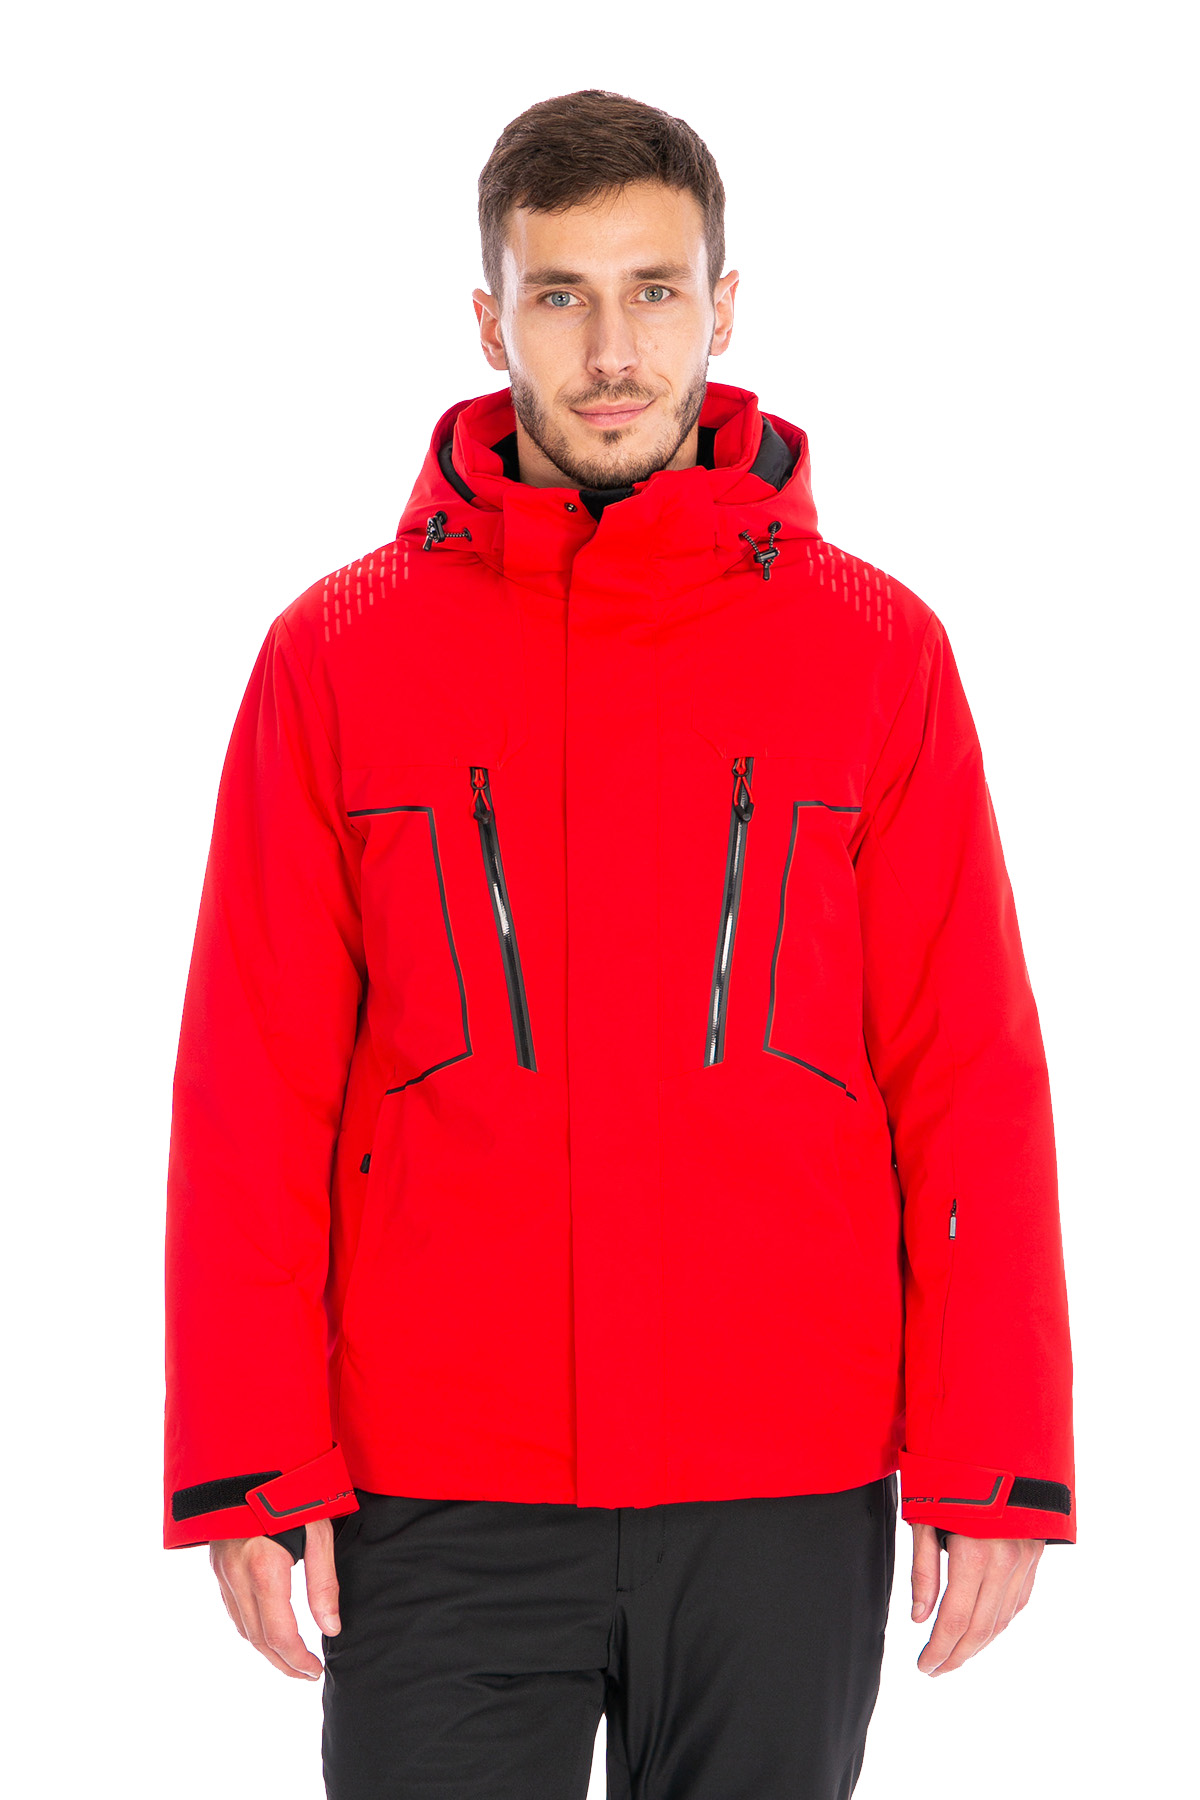 Мужская горнолыжная Куртка Lafor Красный, 767013 (48, m)